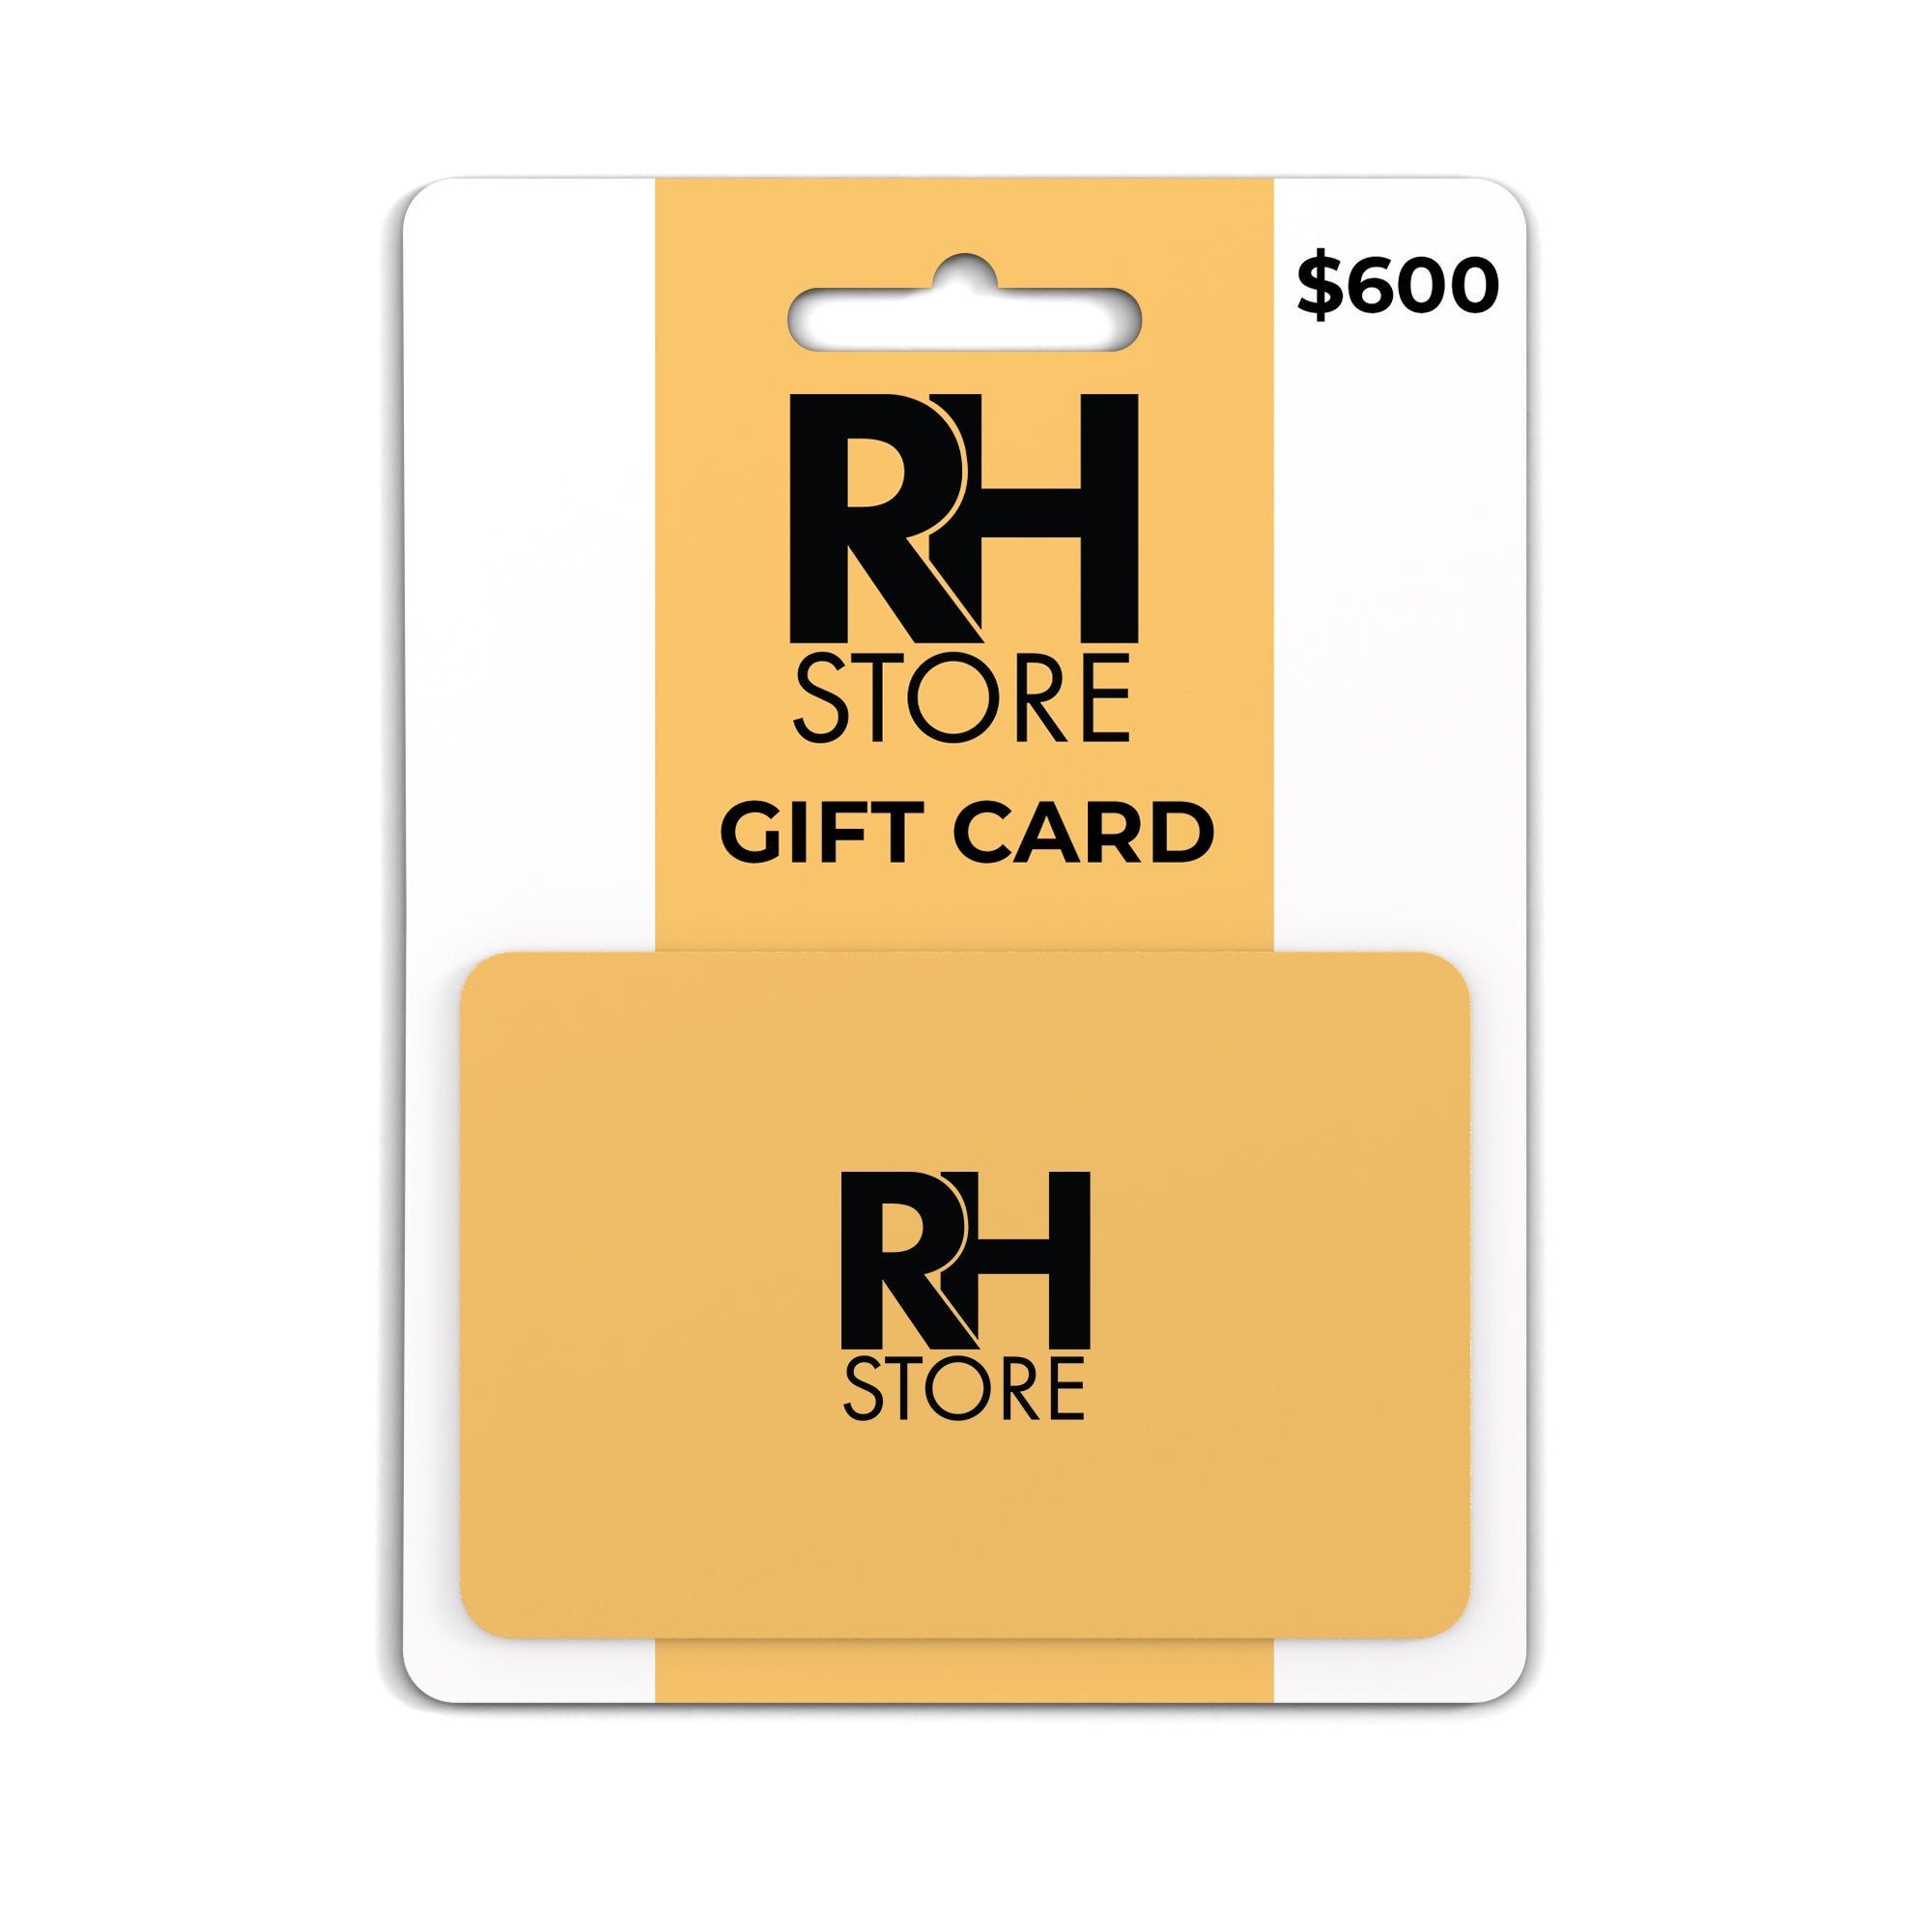 The Range Hood Store Gift Card